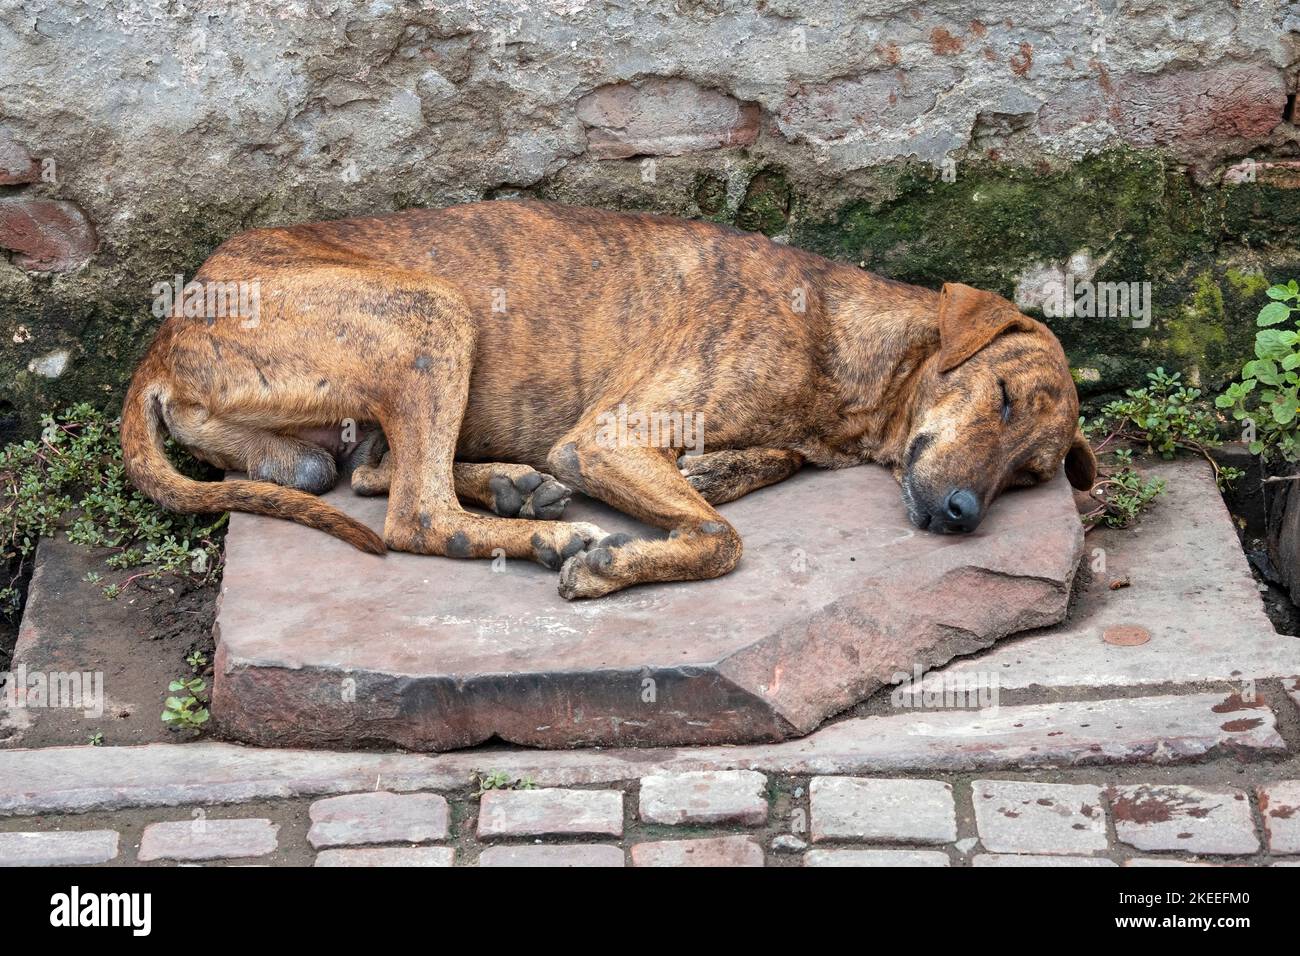 Abandoned dog cur lying on the ground Stock Photo